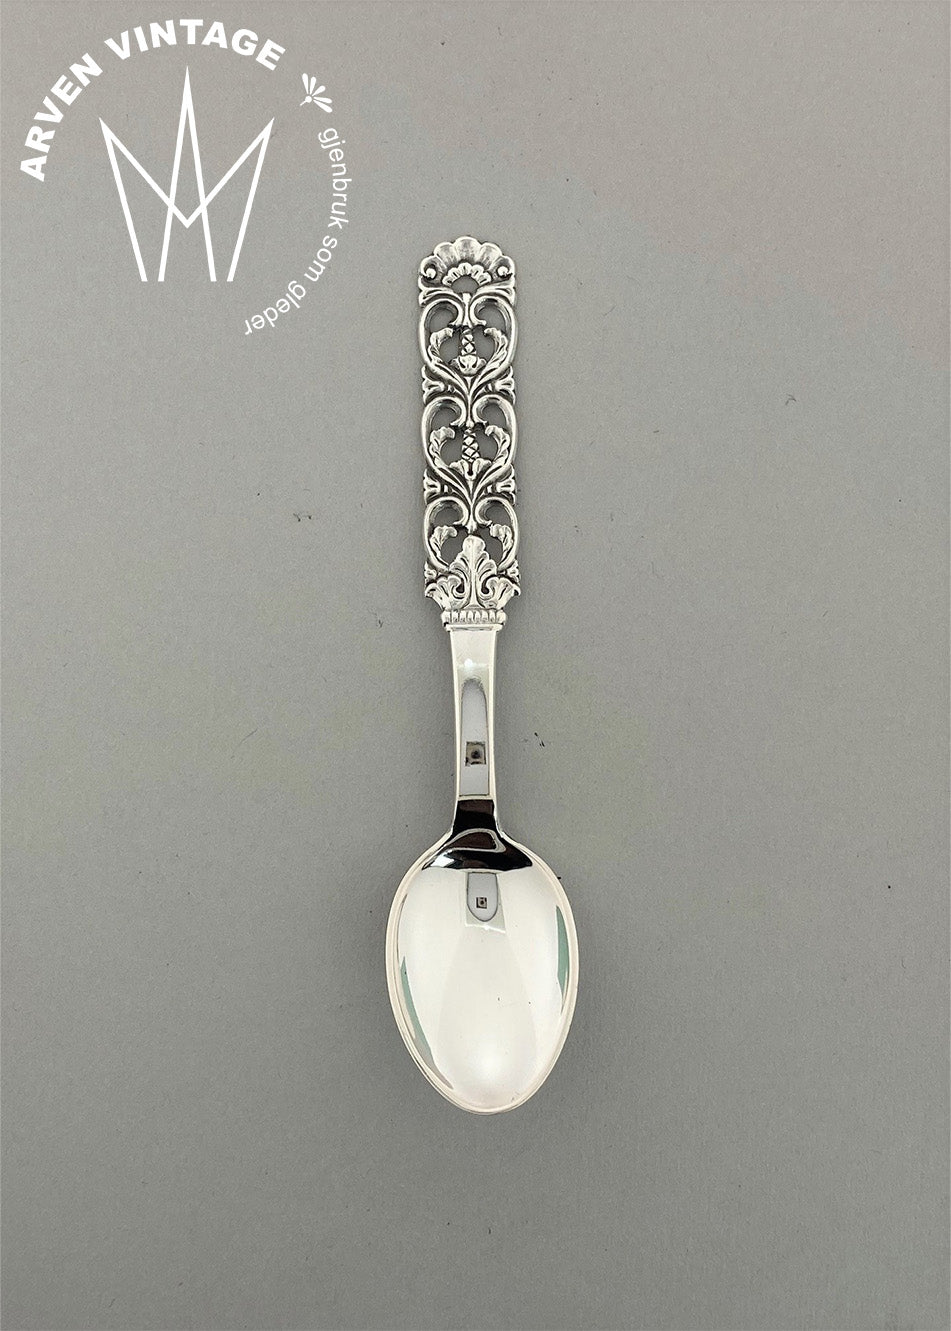 Vintage Kloster coffee spoon